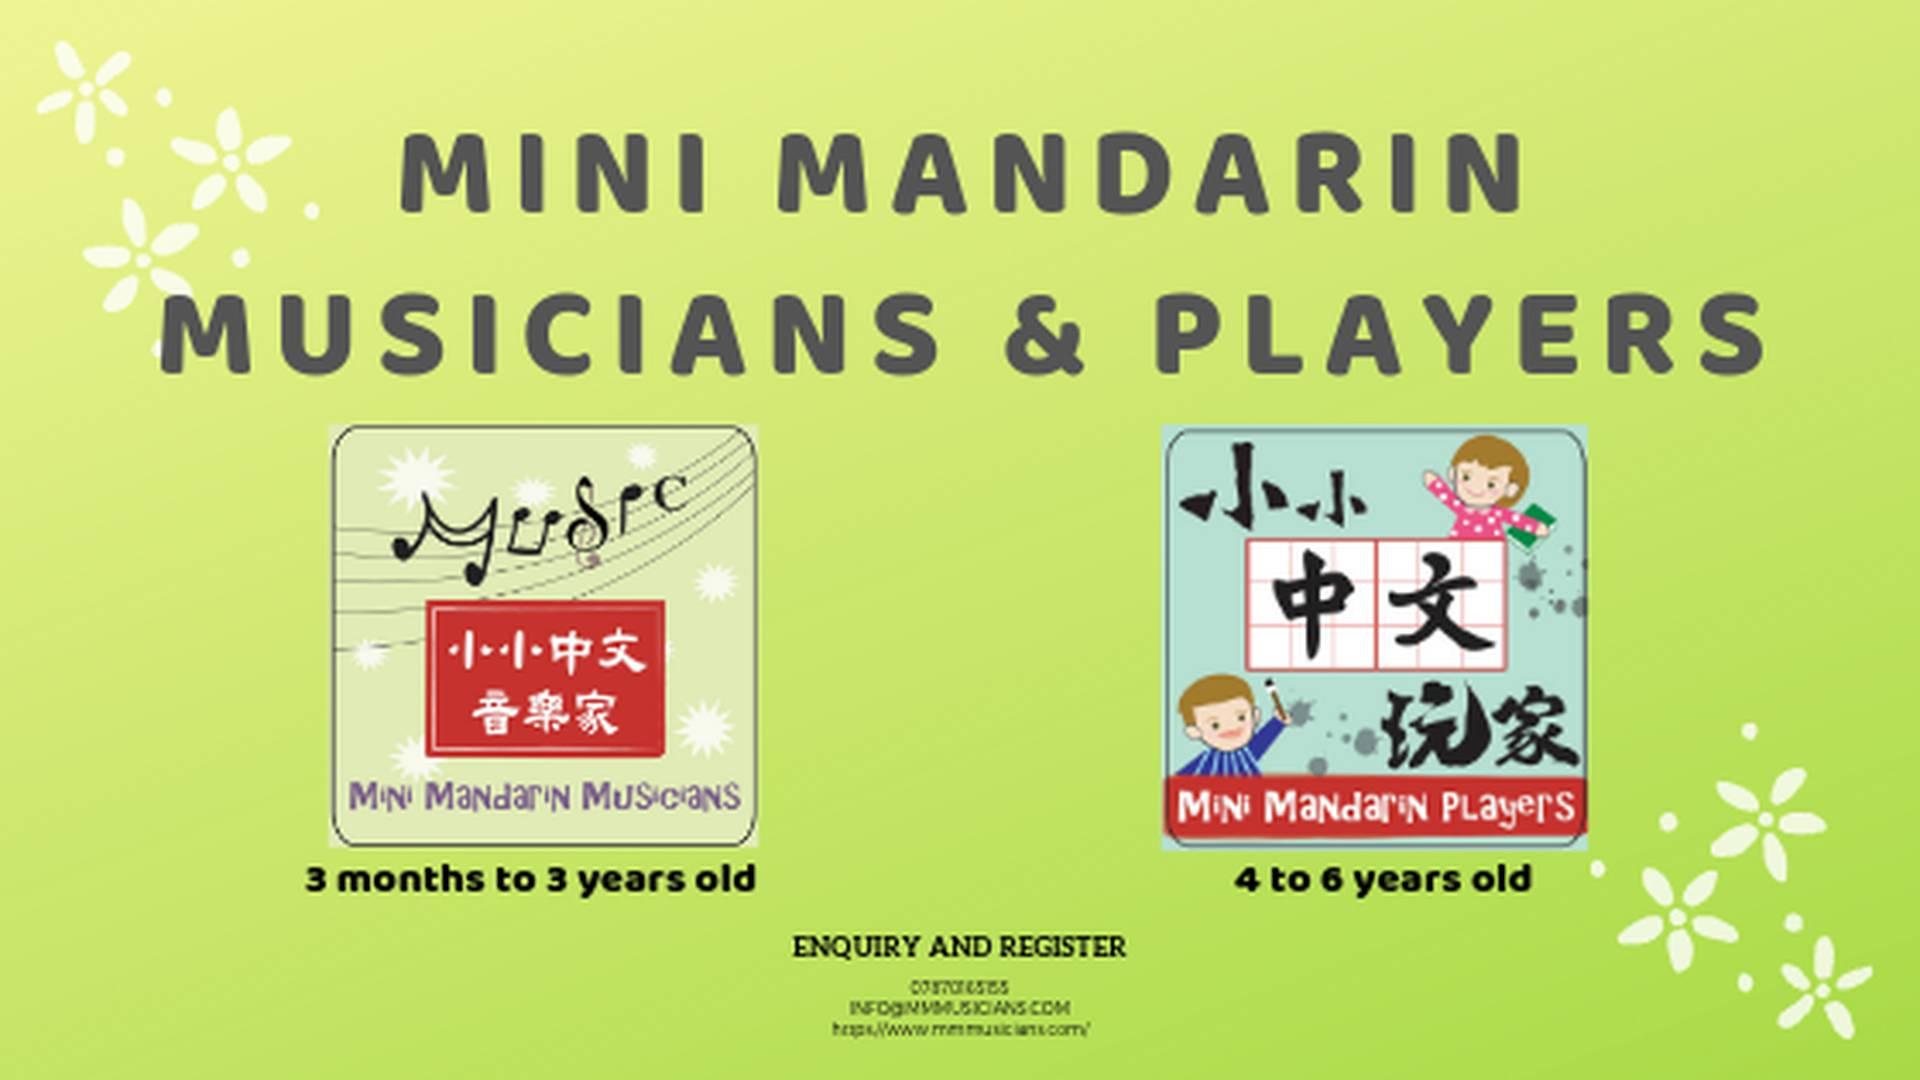 Mini Mandarin Musicians & Players photo